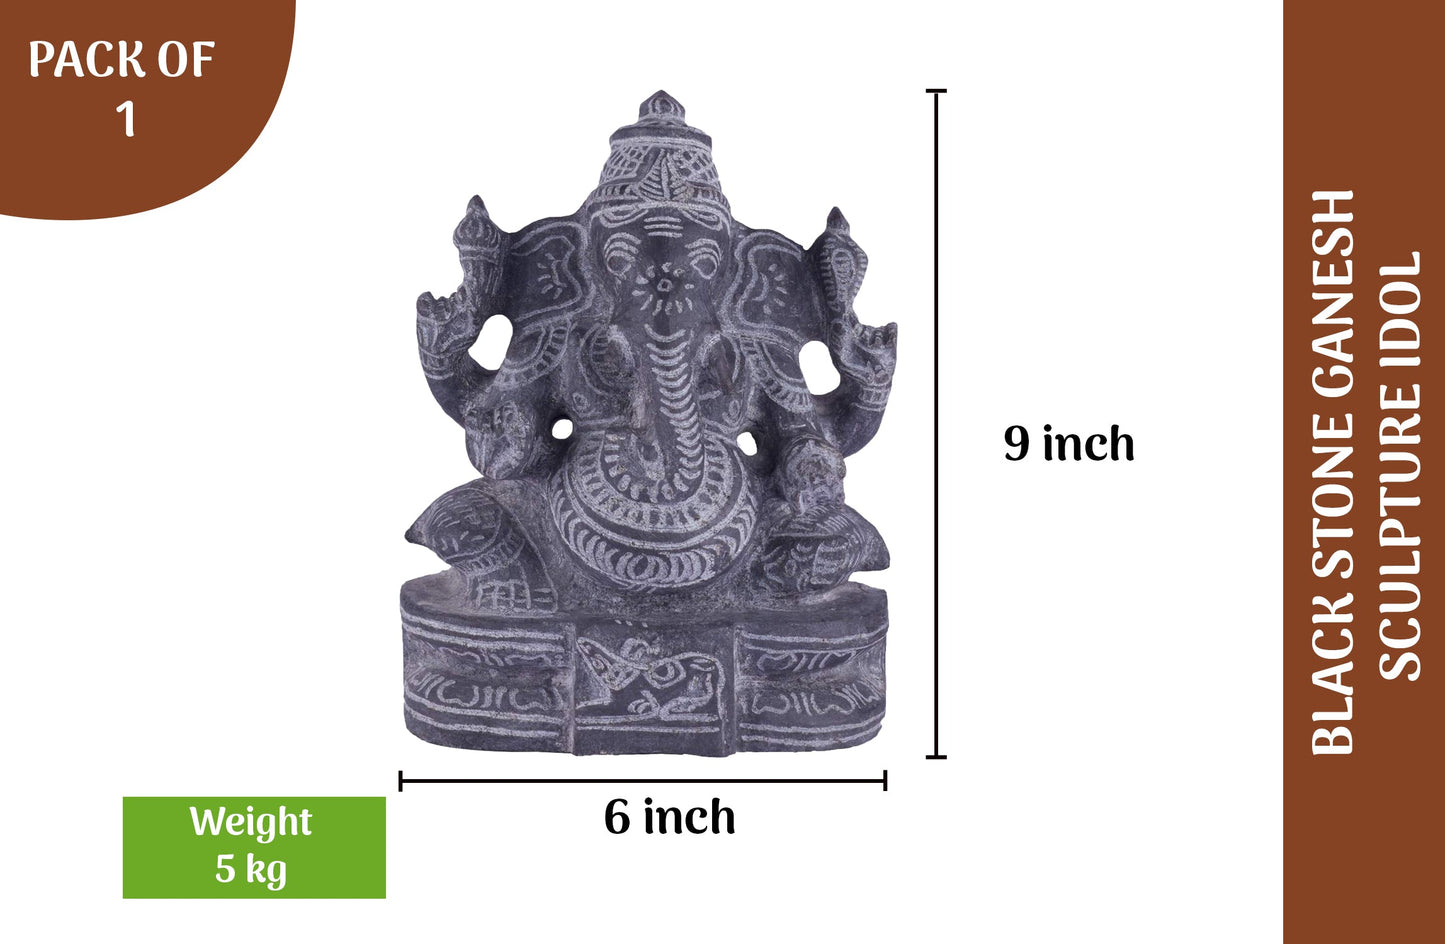 Black Stone Idol Valampuri Vinayagar 9 inch